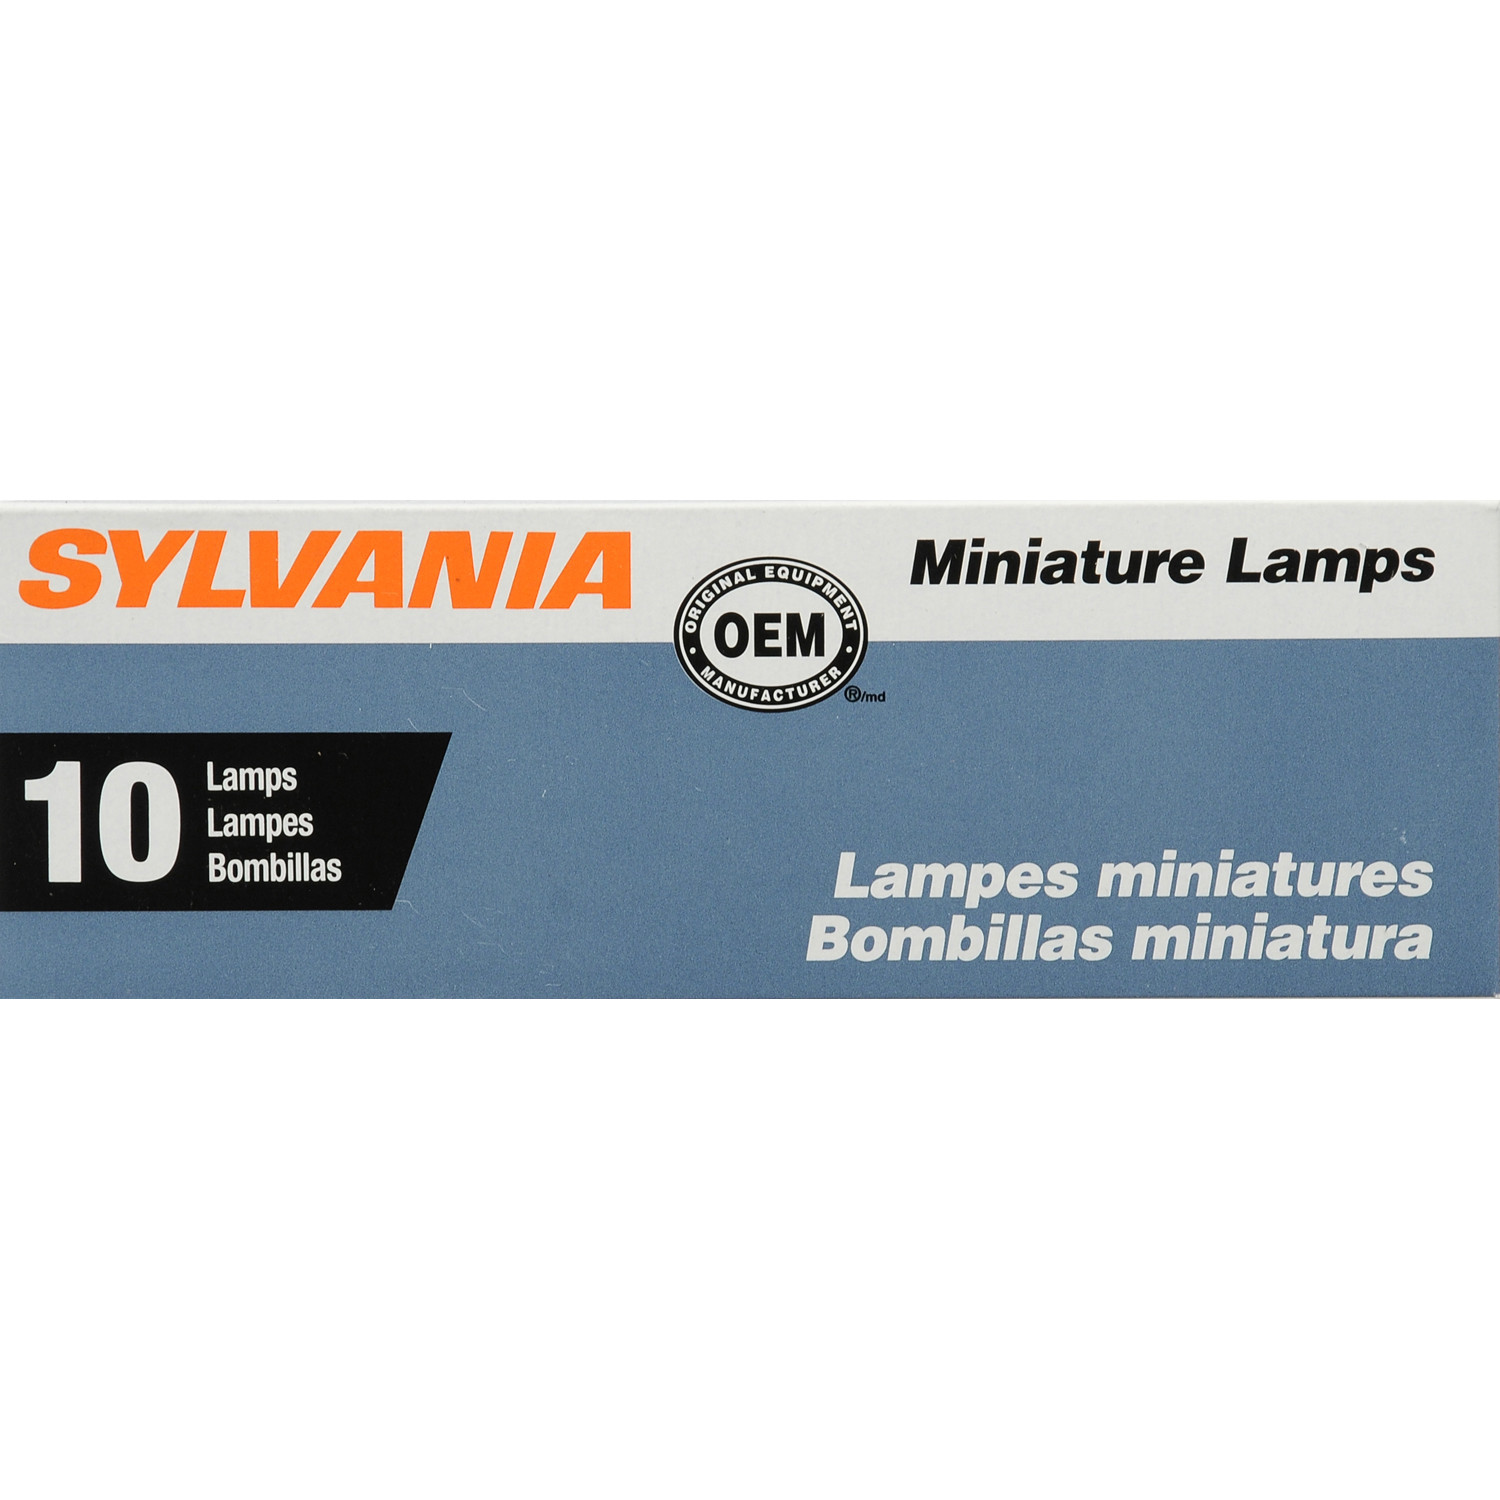 SYLVANIA RETAIL PACKS - 10-Pack Box License Light Bulb - SYR 89.TP